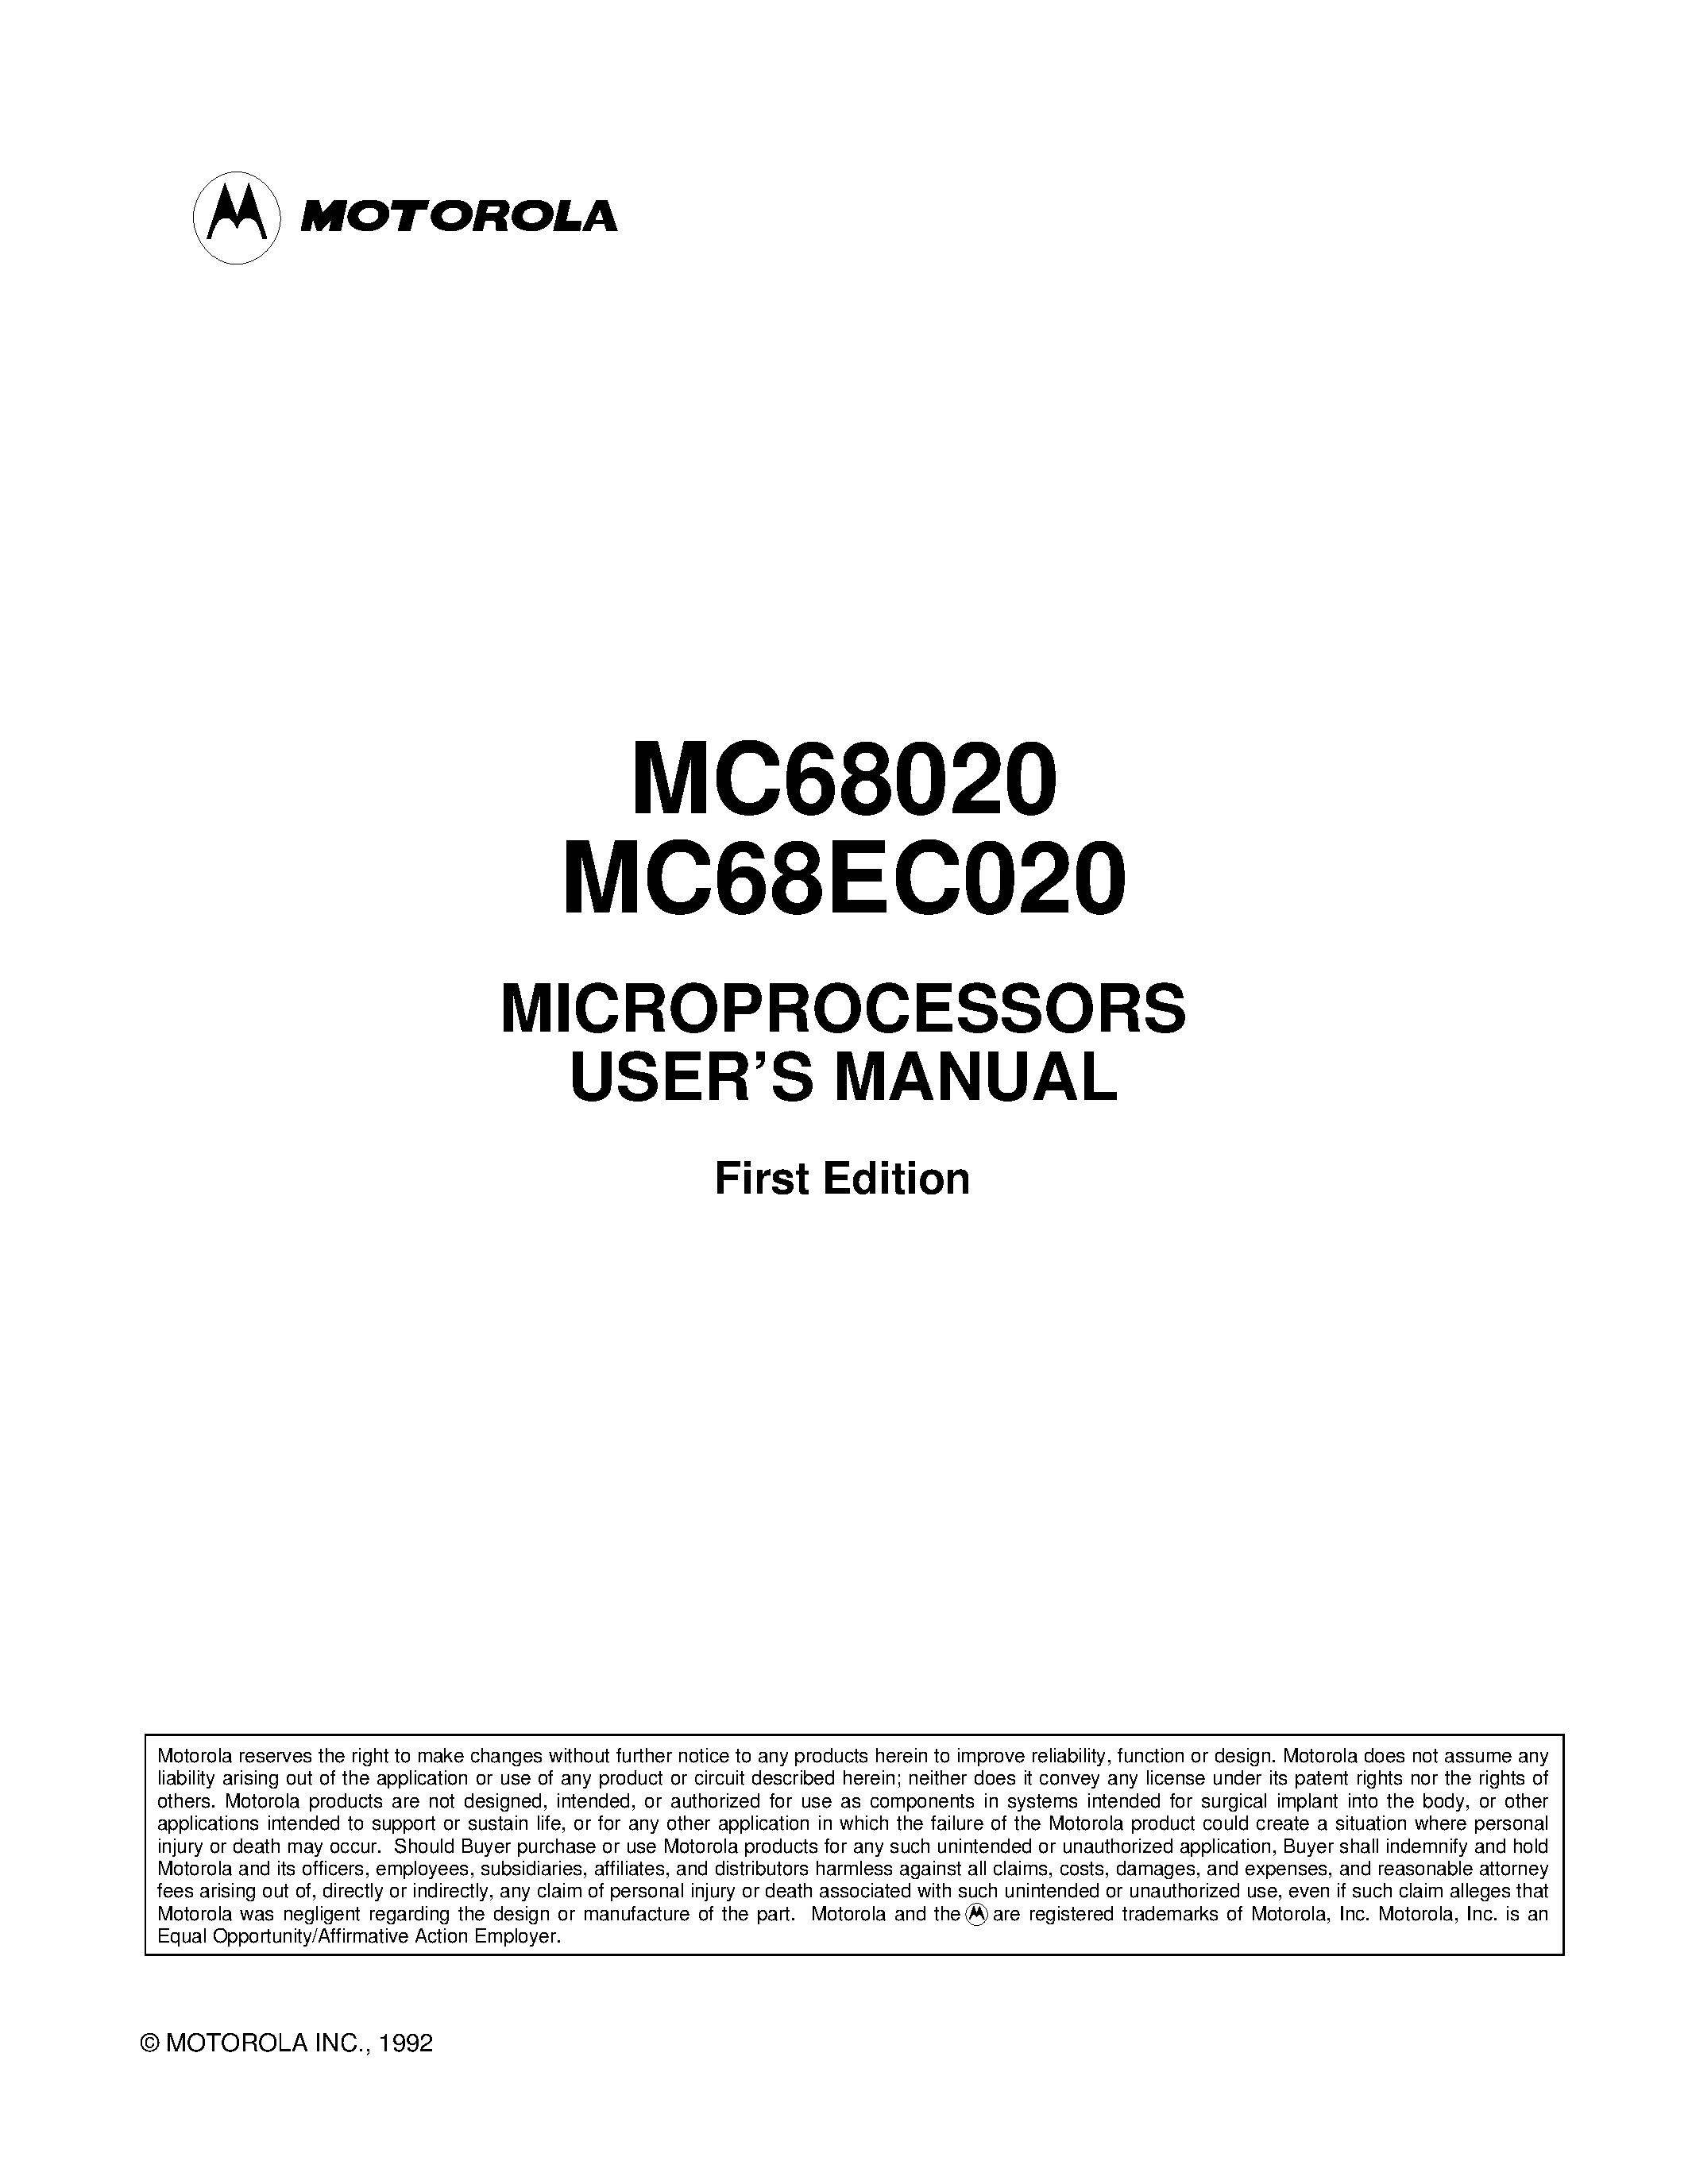 Datasheet MC68020 - (MC68020 / MC68EC020) MICROPROCESSORS USERS MANUAL page 1